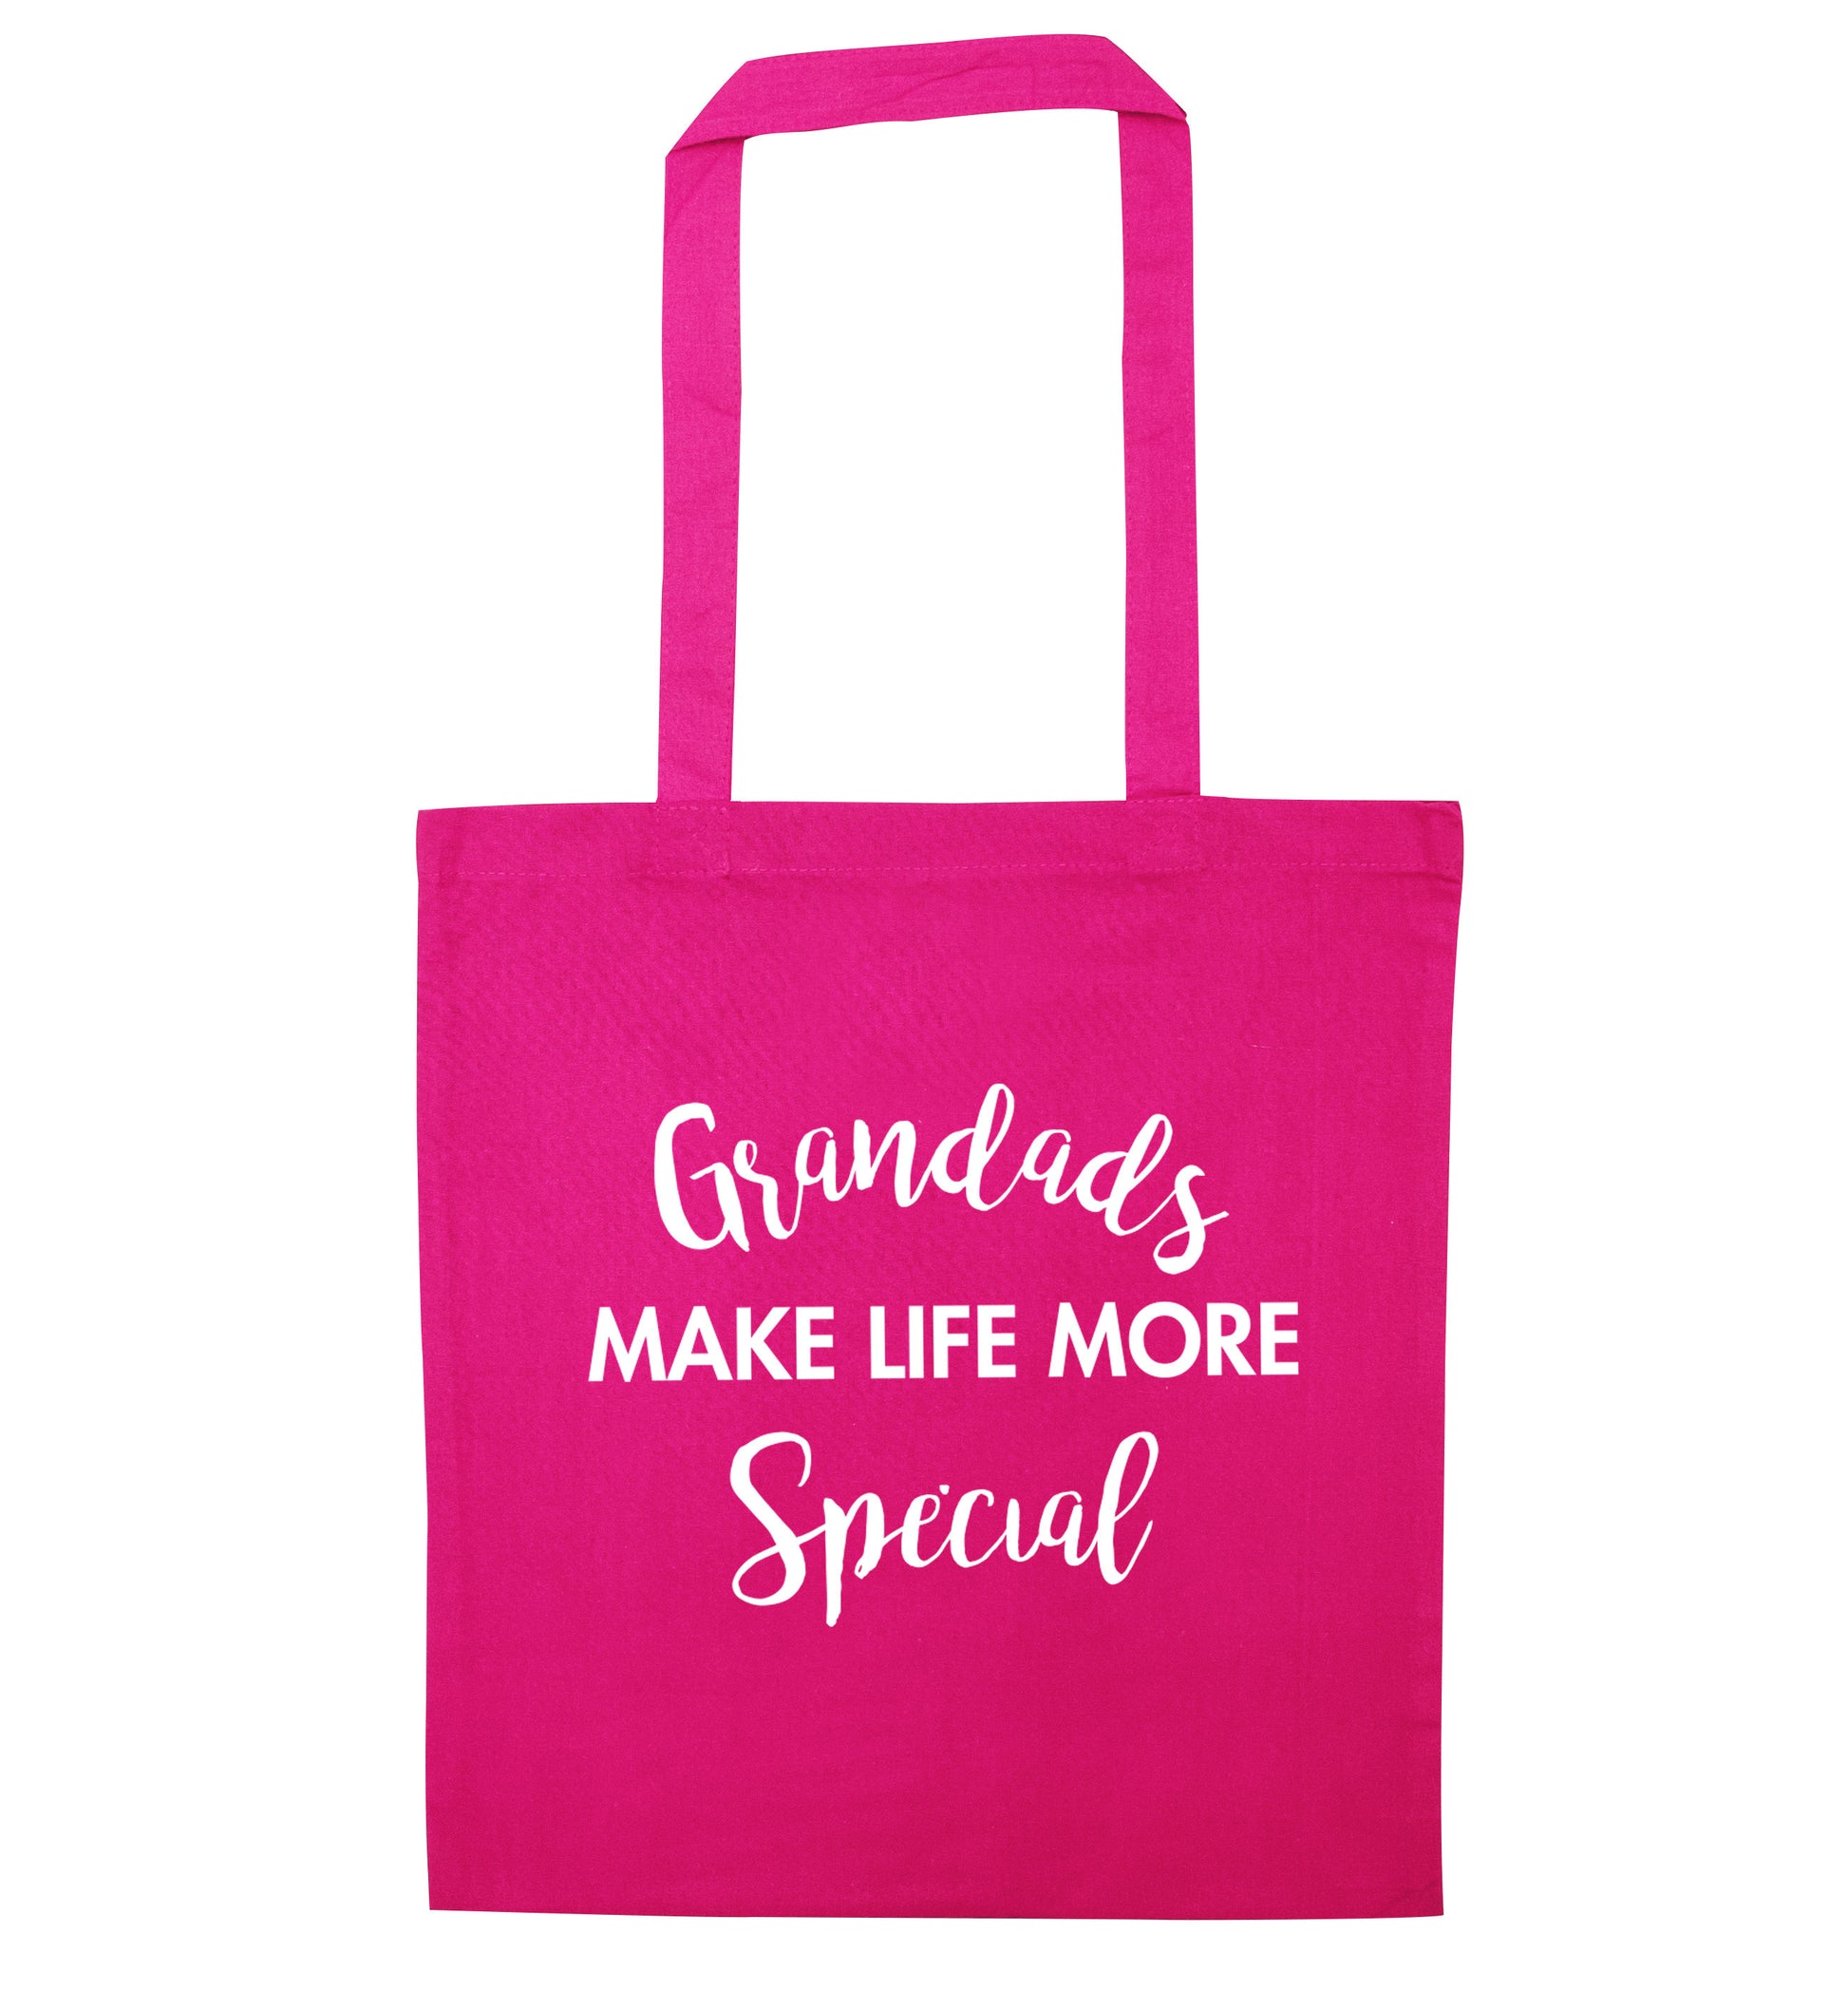 Grandads make life more special pink tote bag